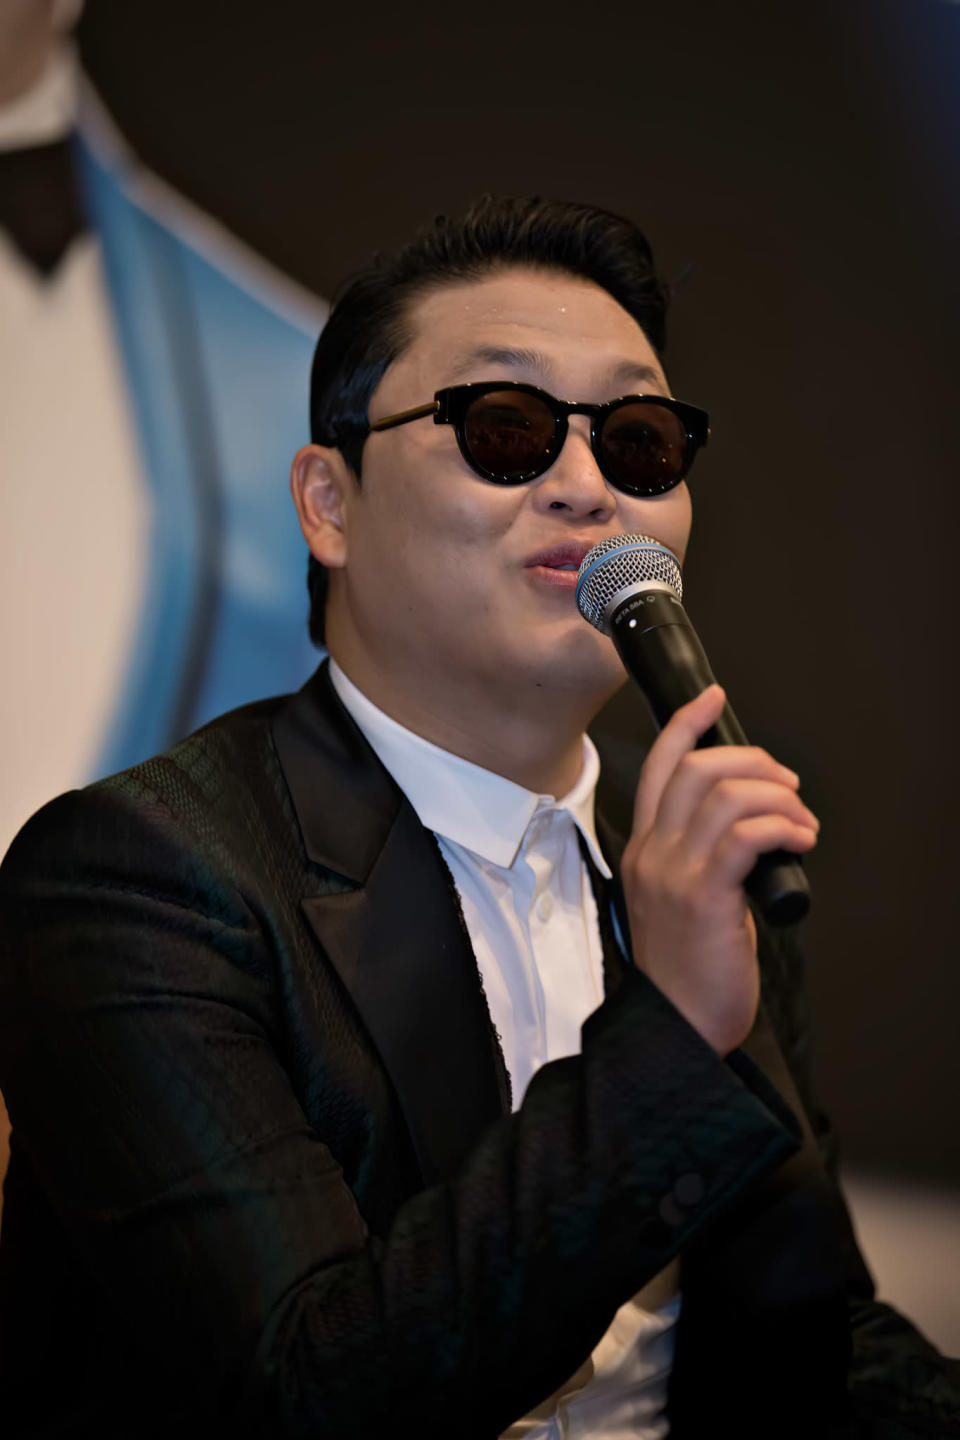 Psy performs in a free showcase at Marina Bay Sands. (Yahoo! photo)